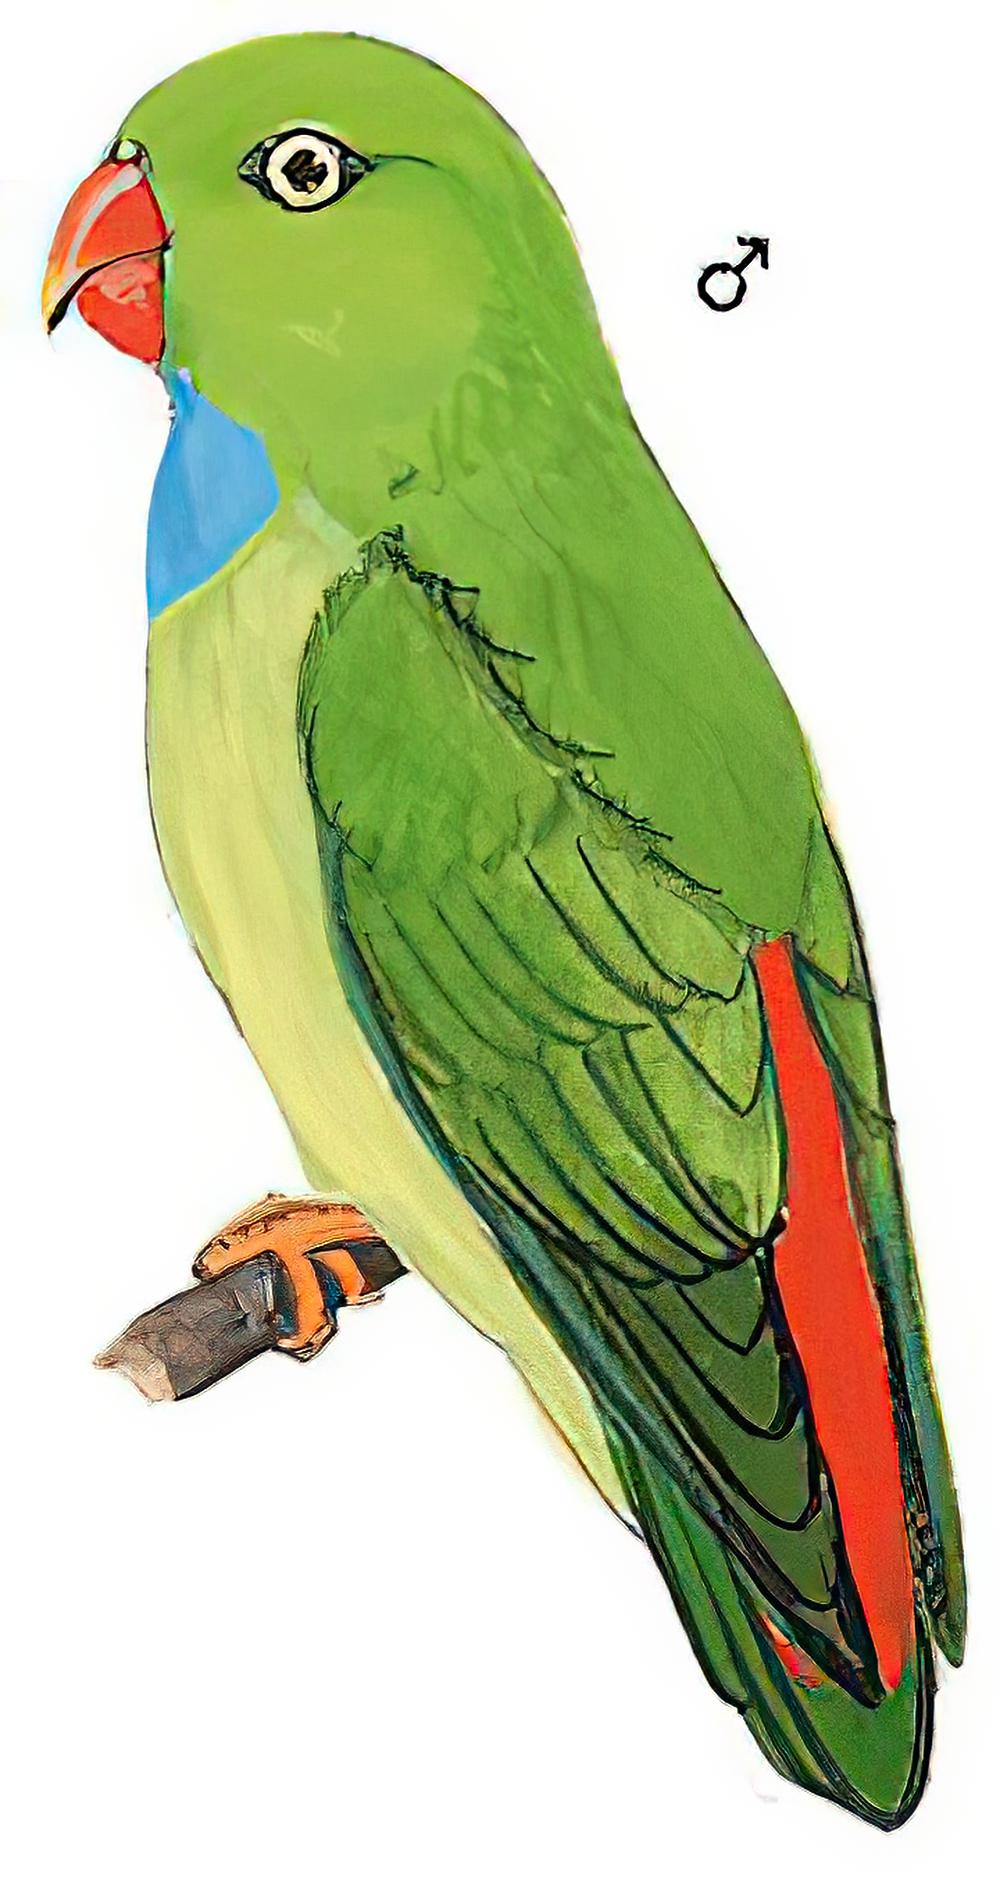 短尾鹦鹉 / Vernal Hanging Parrot / Loriculus vernalis